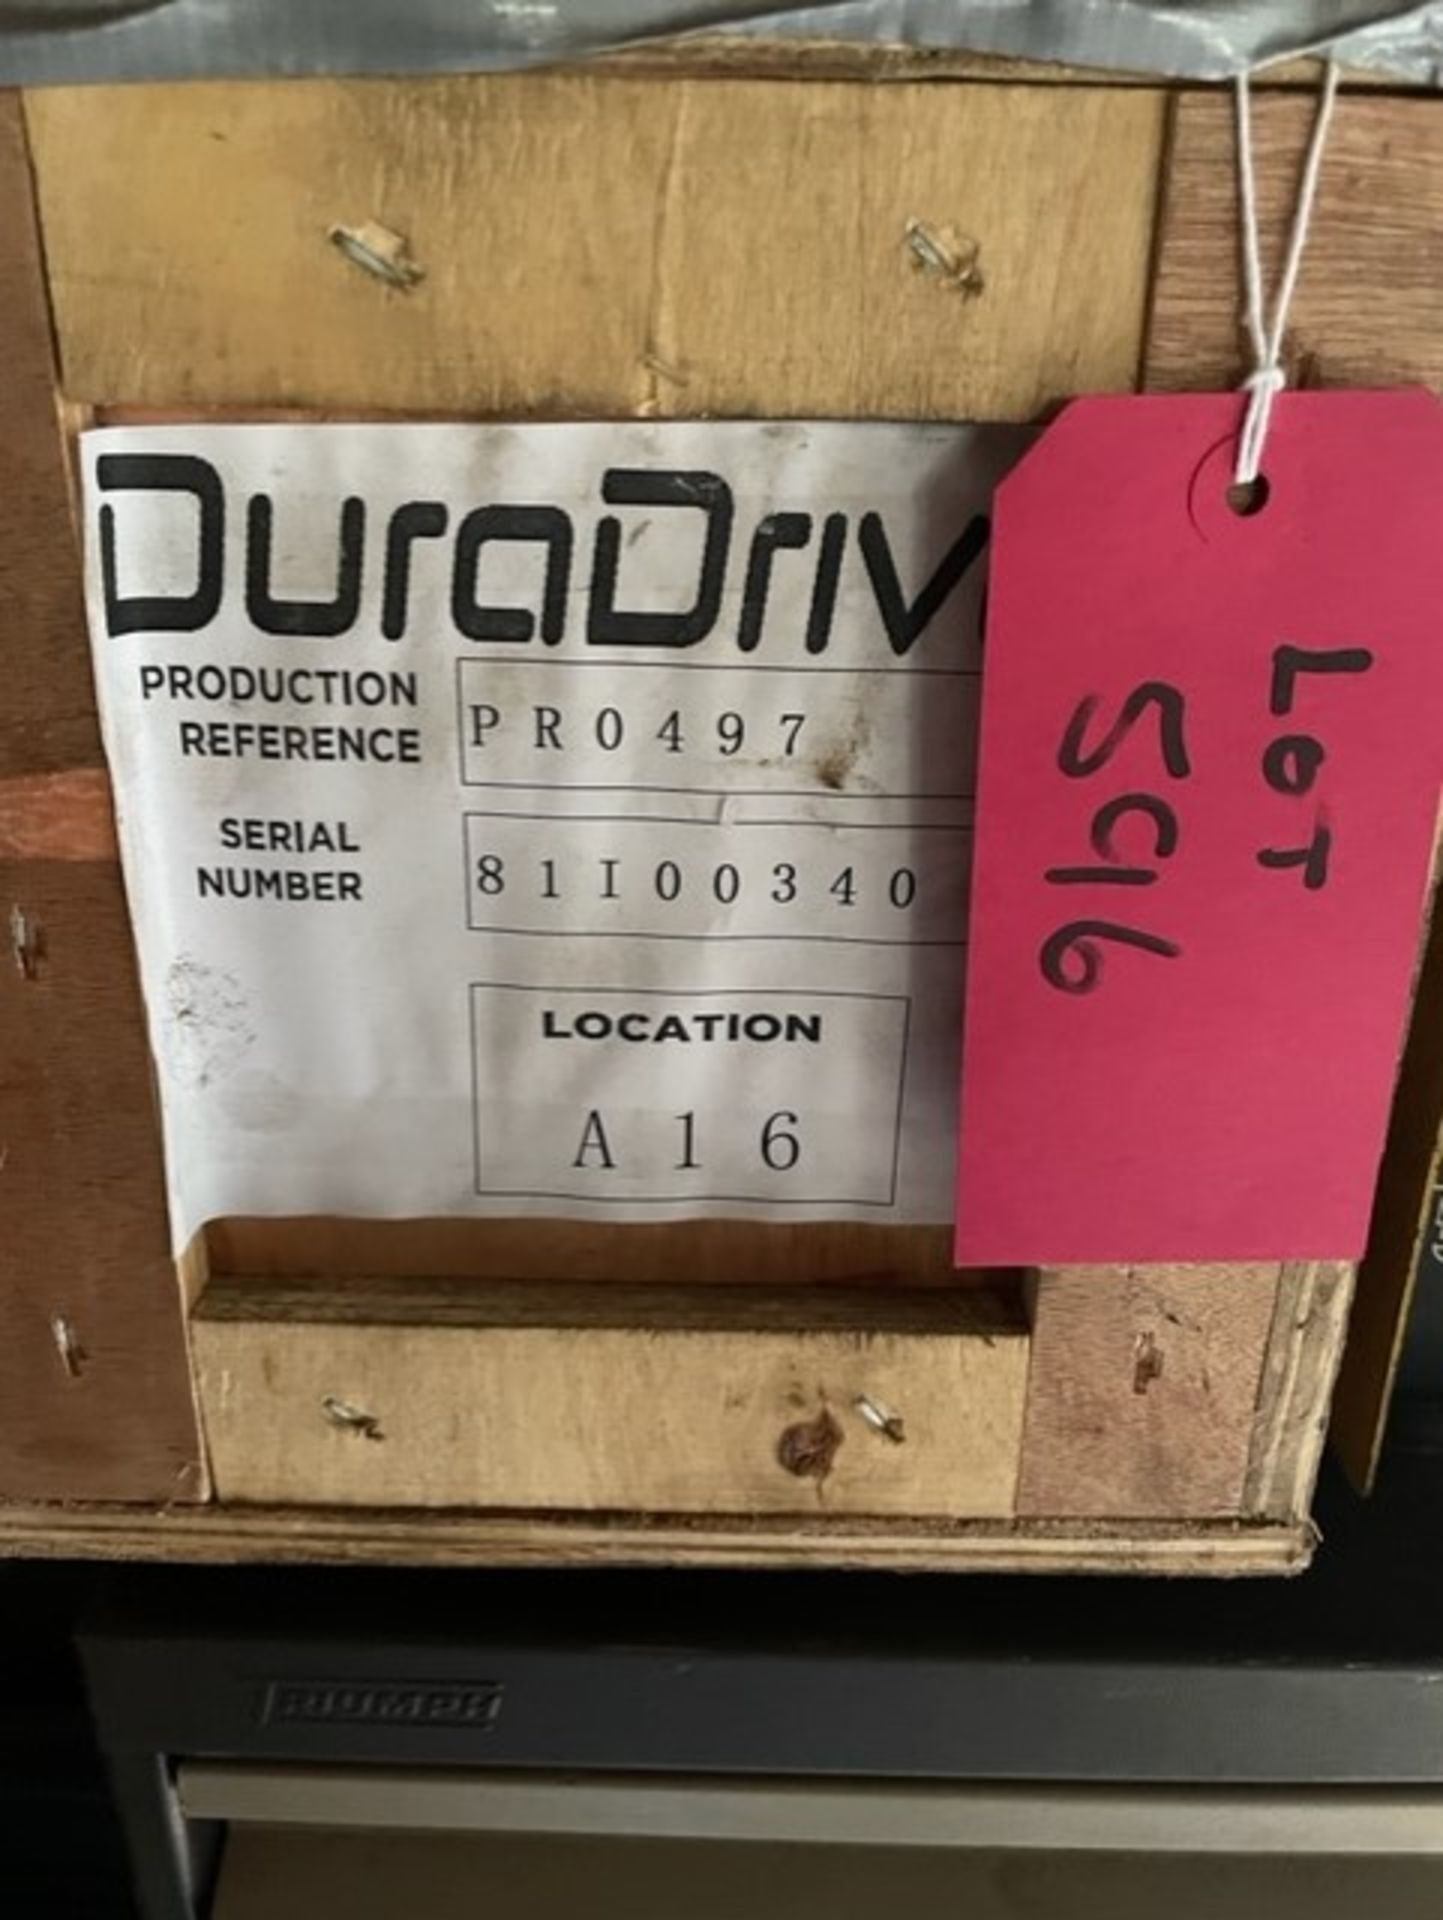 Pro 497 duradrive transmission - brand new in box